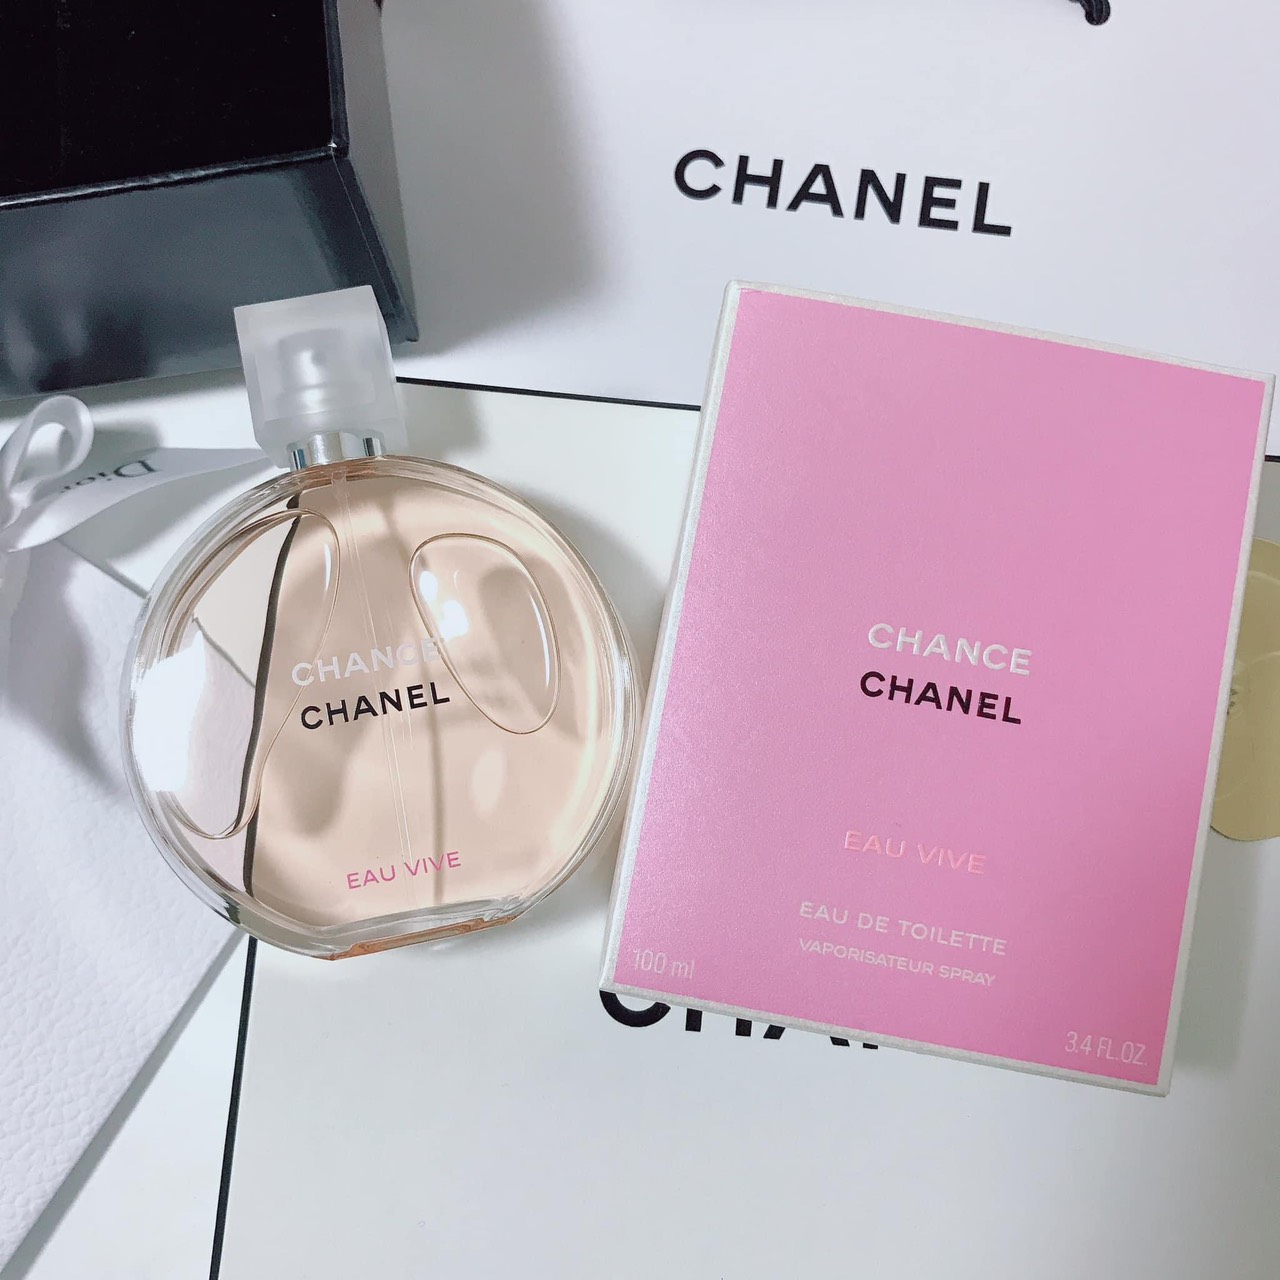 Тестер DUBAI женский Chanel Chance Eau Vive 50 мл продажа цена в Киеве  Женская парфюмерия от uaroomcom  1577216826